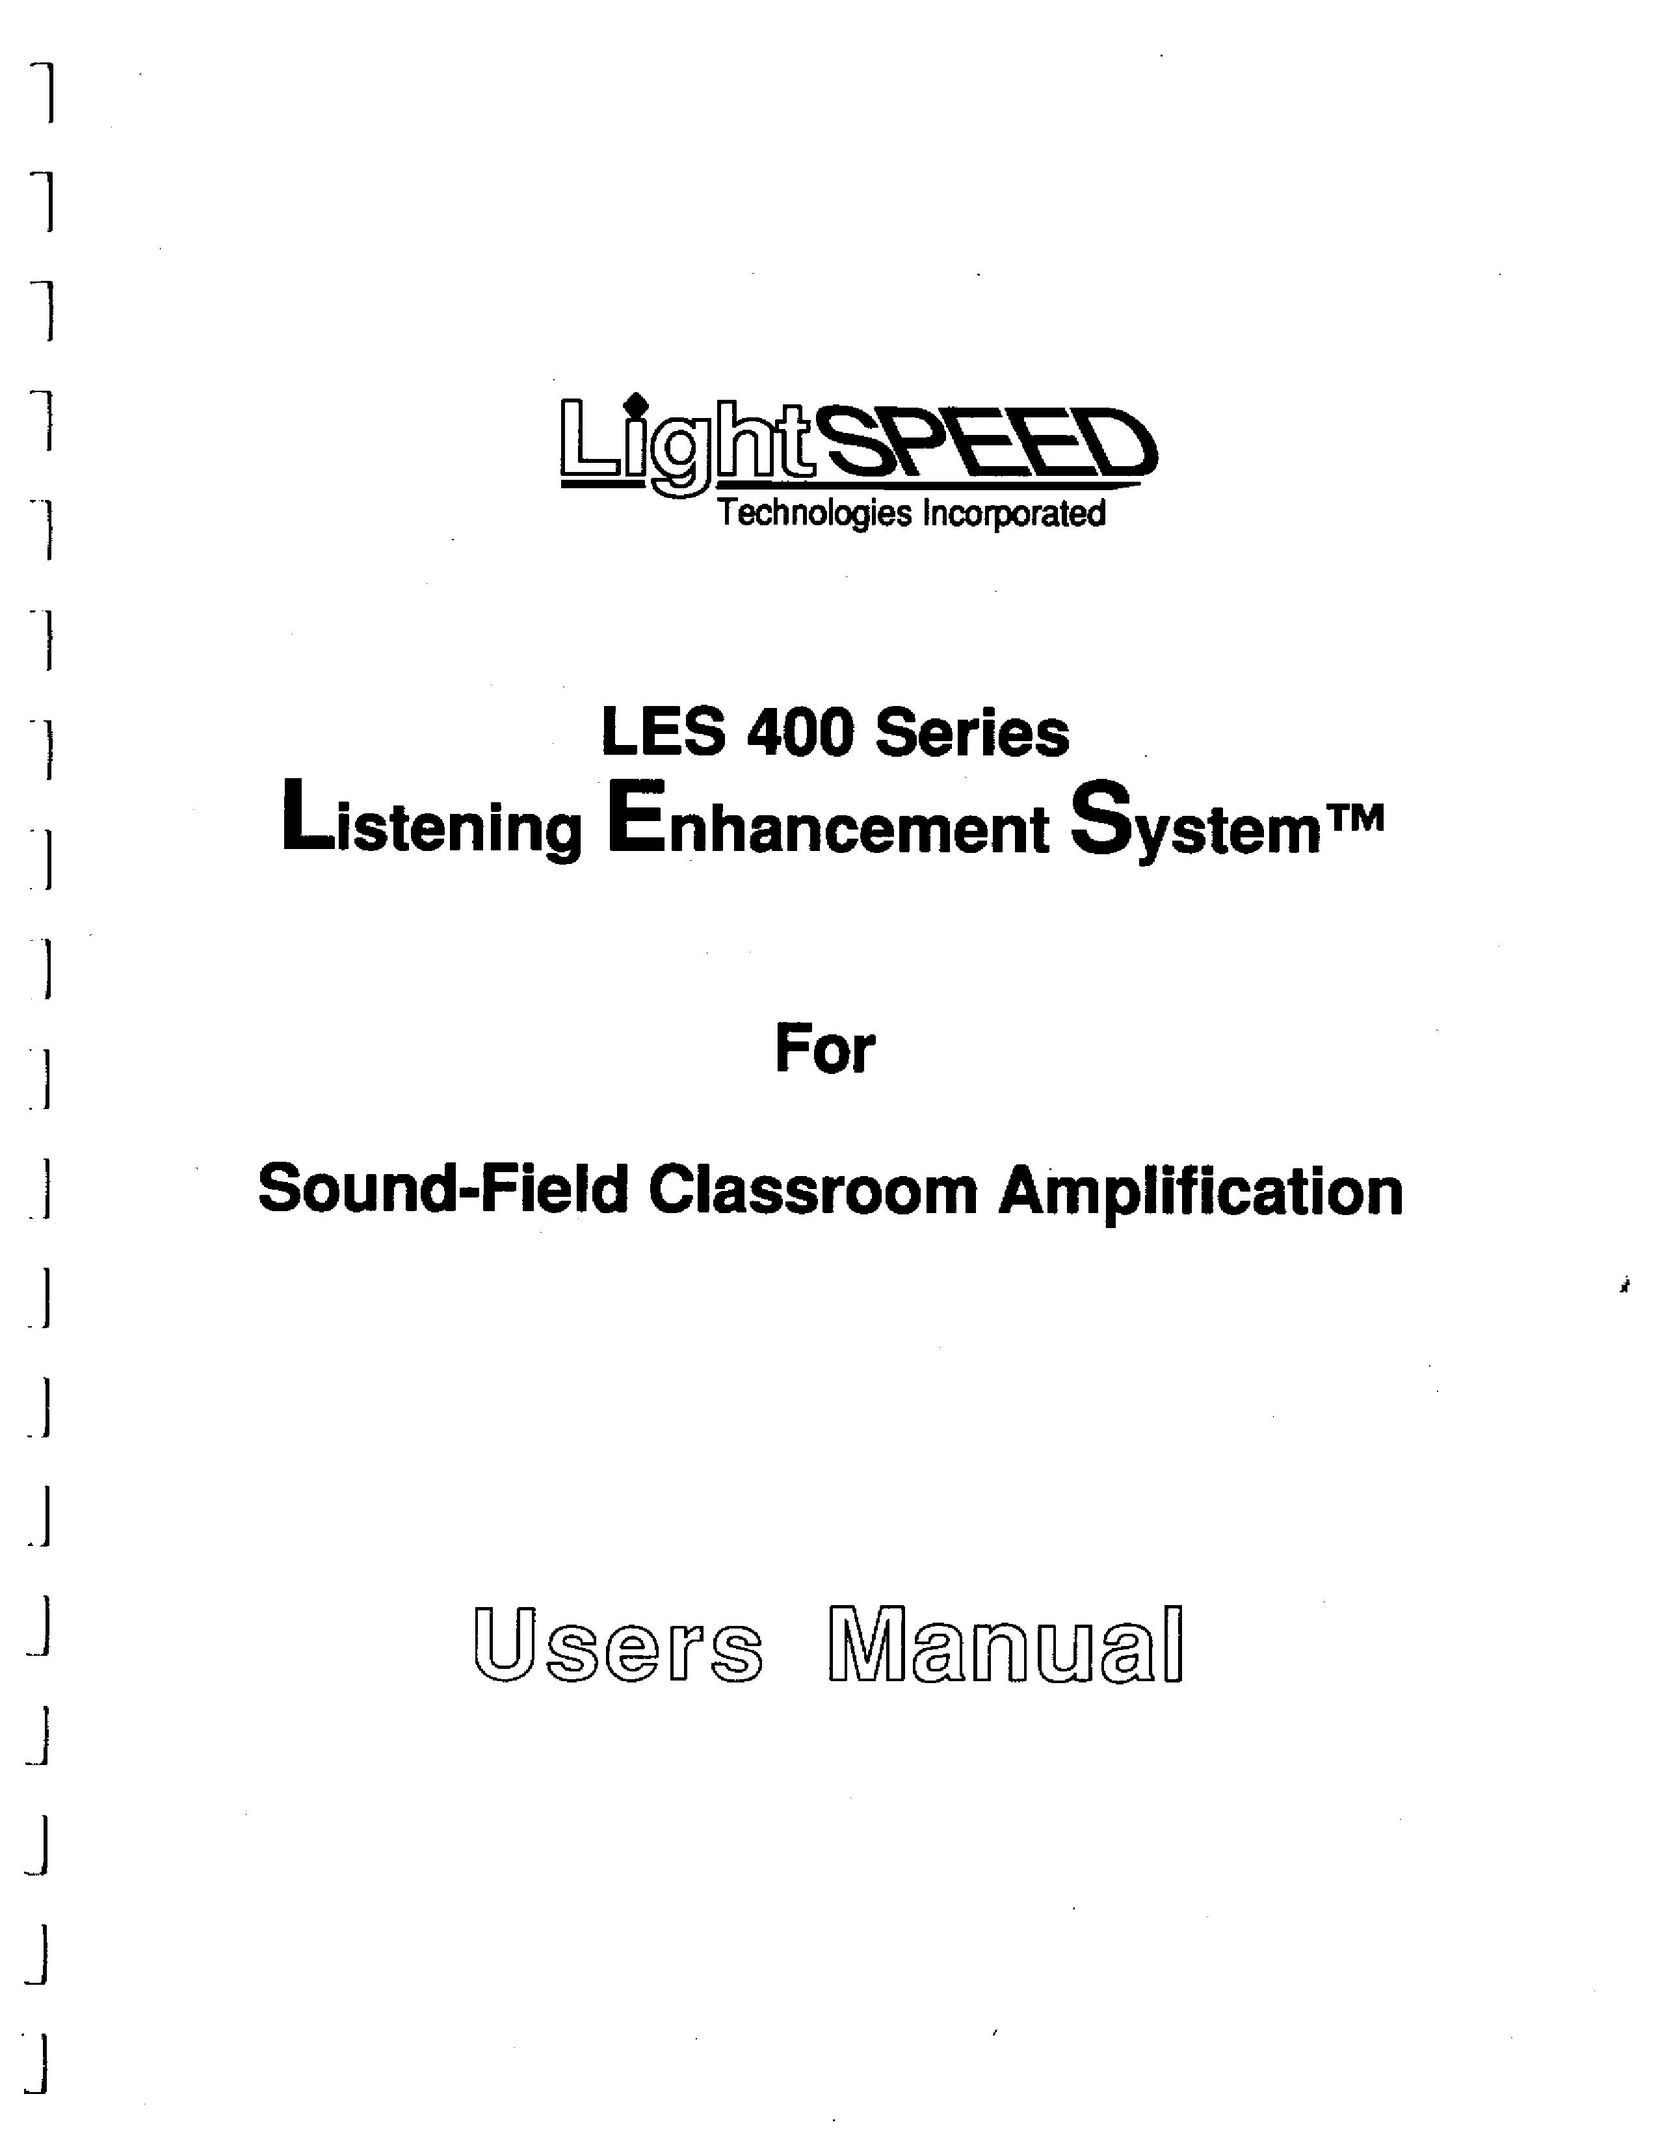 LightSpeed Technologies LES 400 Series Stereo Amplifier User Manual